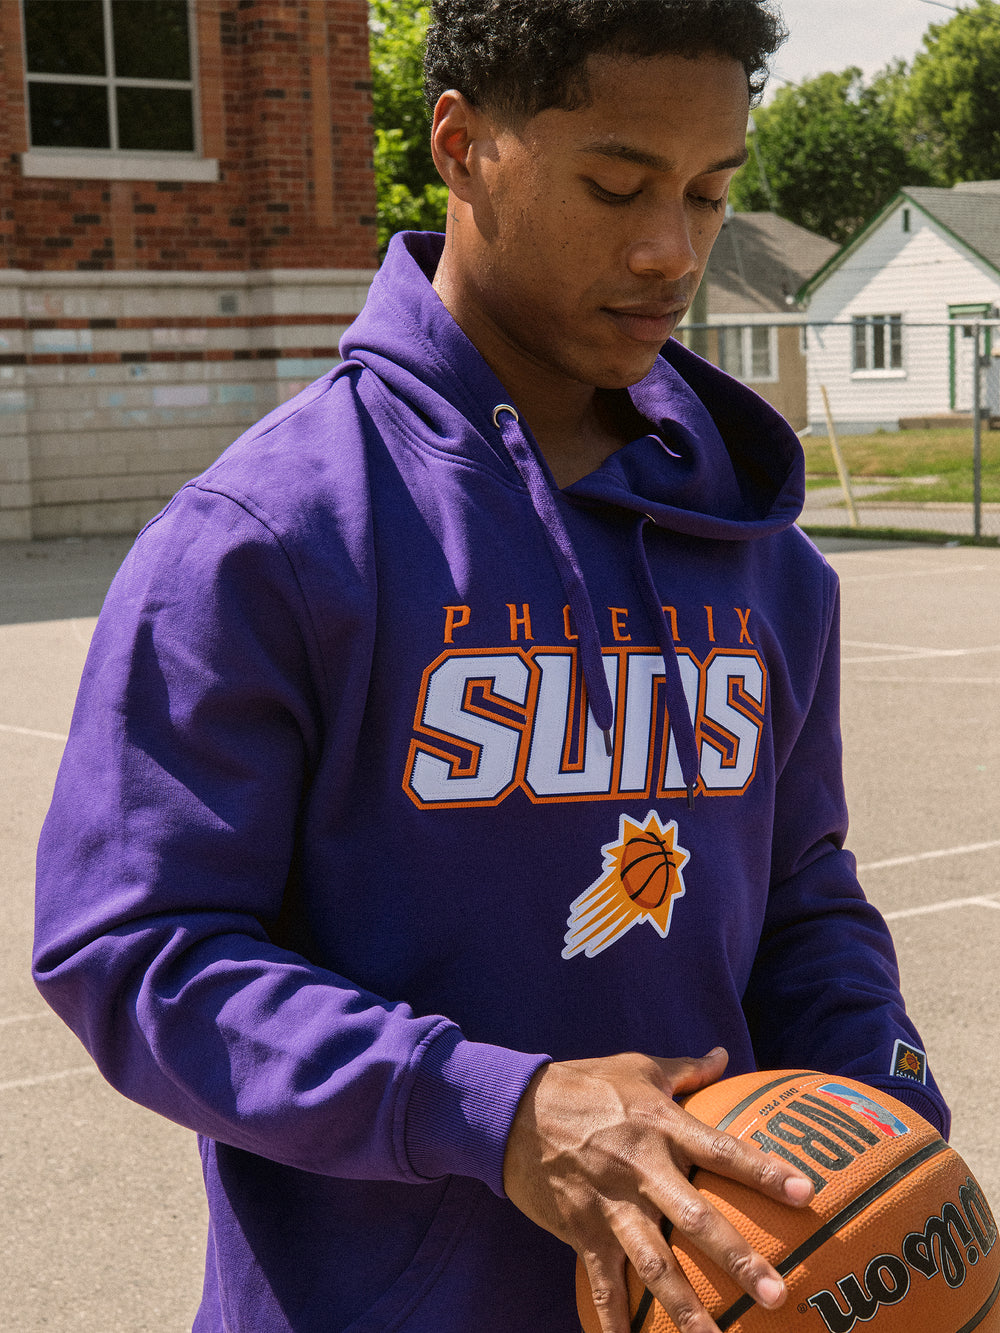 Phoenix Suns Men's Nike NBA Long-Sleeve T-Shirt